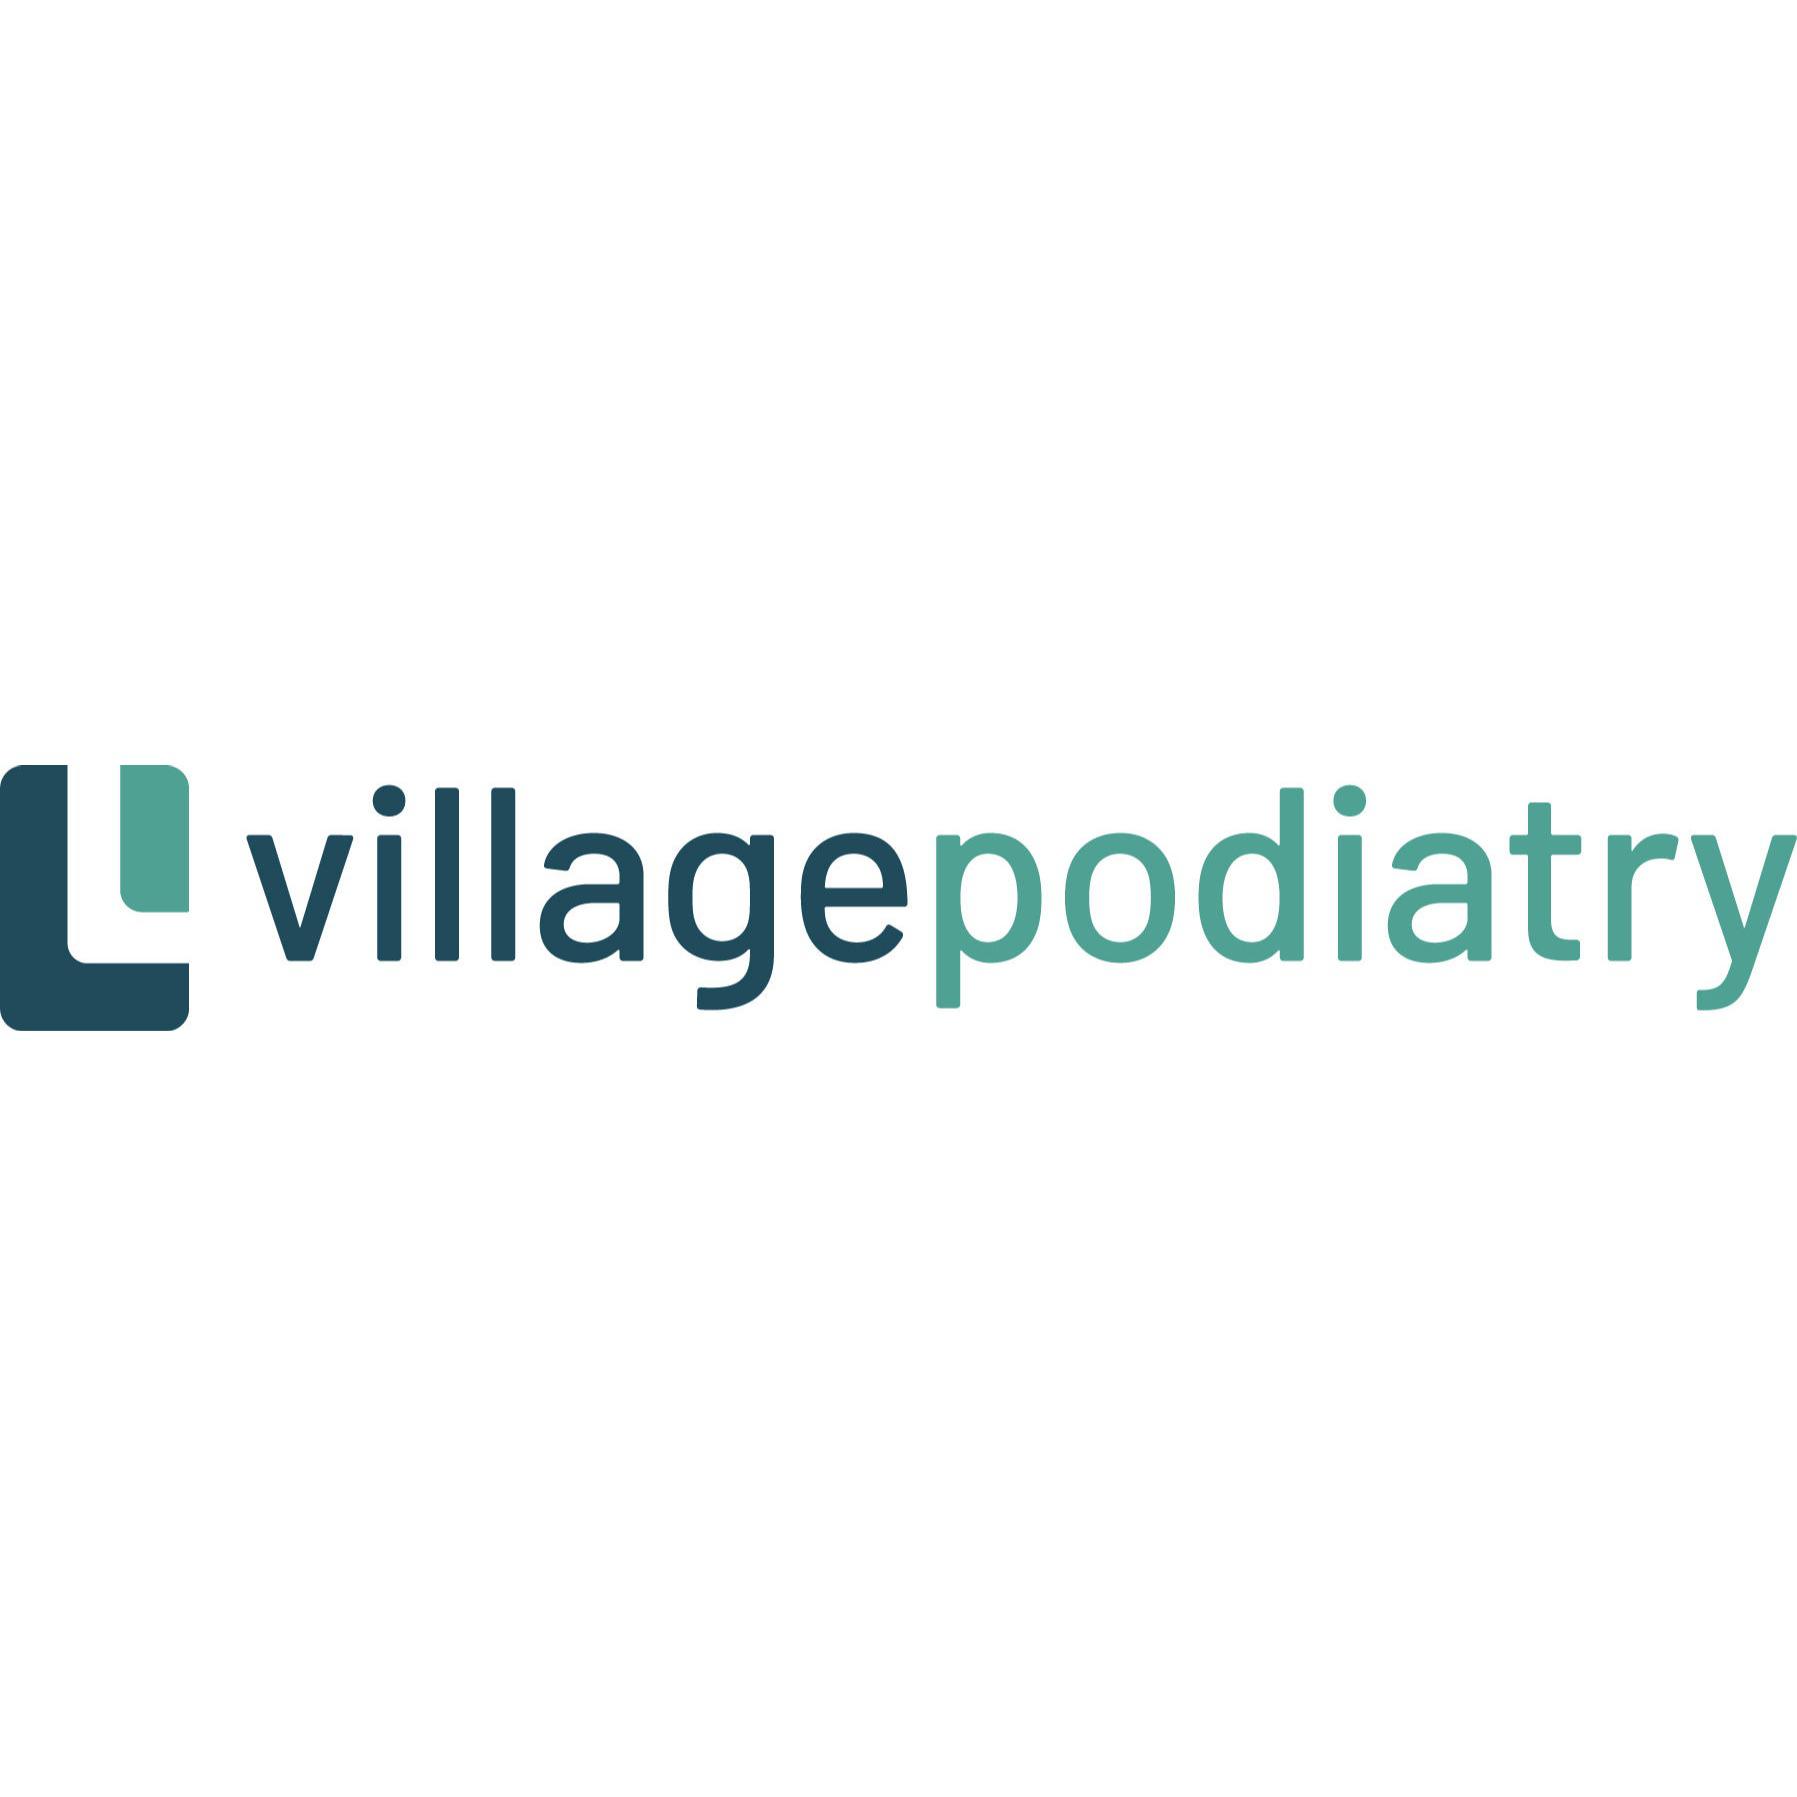 Village Podiatry: Alan S Banks, DPM